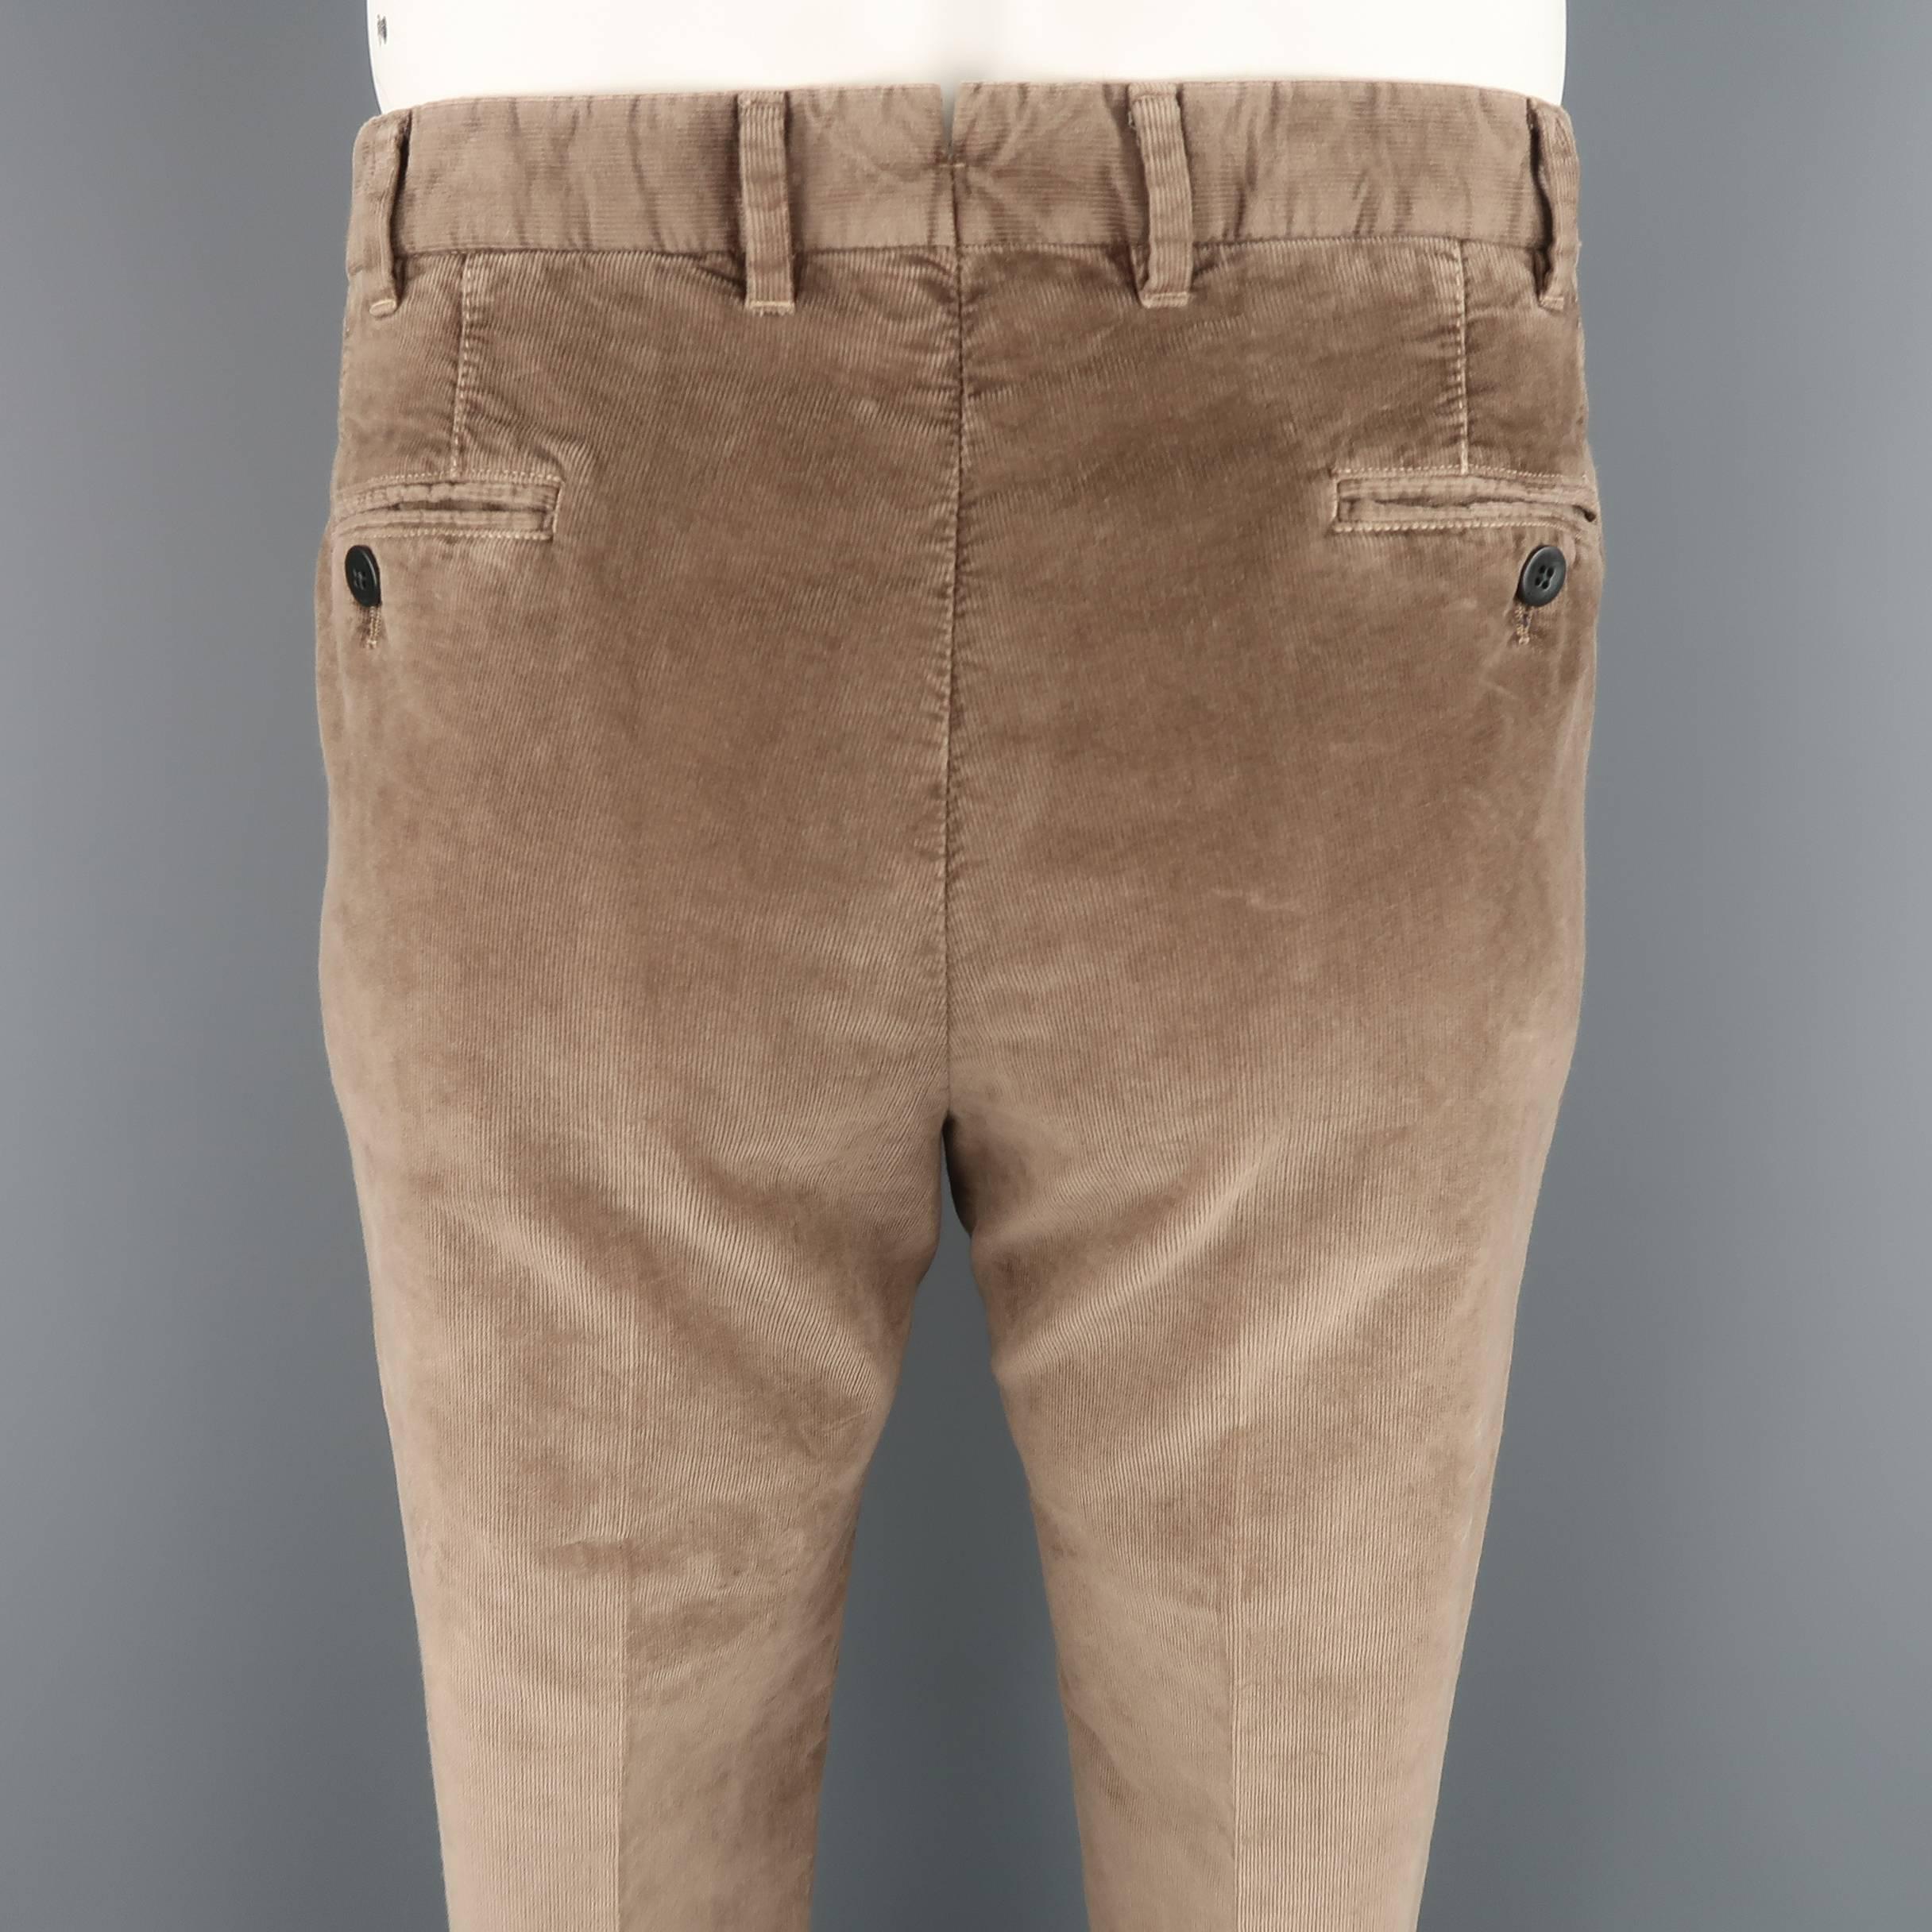 Brown Men's BOGLIOLI Size 34 Tan Textured Corduroy Dress Pants